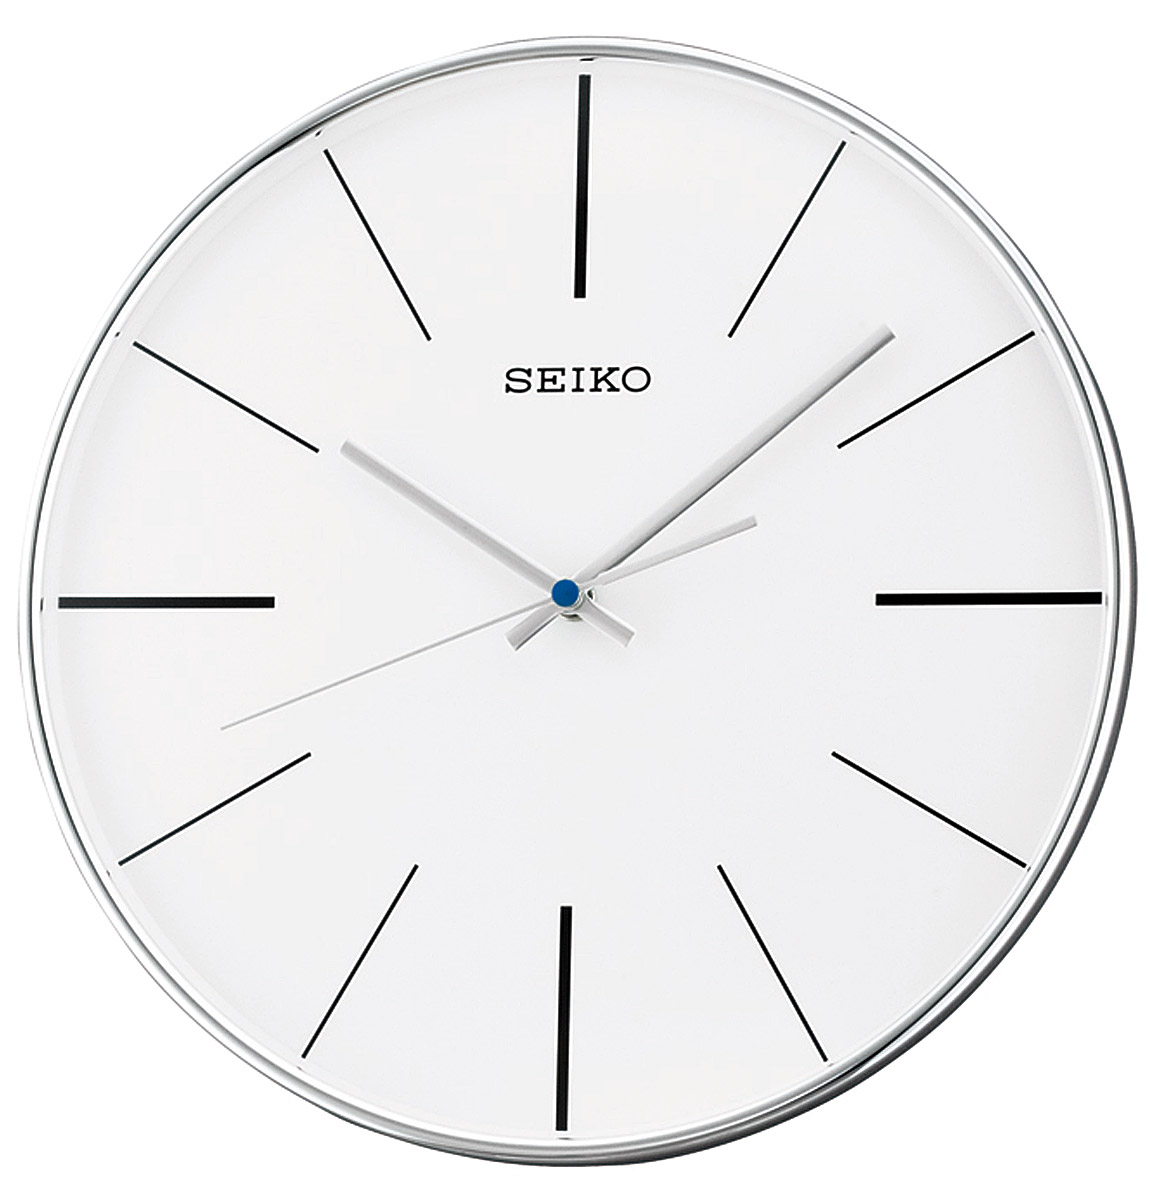 Размеры циферблата часов. Настенные часы Seiko qxa634a. Часы настенные кварцевые Seiko qxa653k. Настенные часы Seiko qxa020s. Настенные часы Seiko qxa342s.